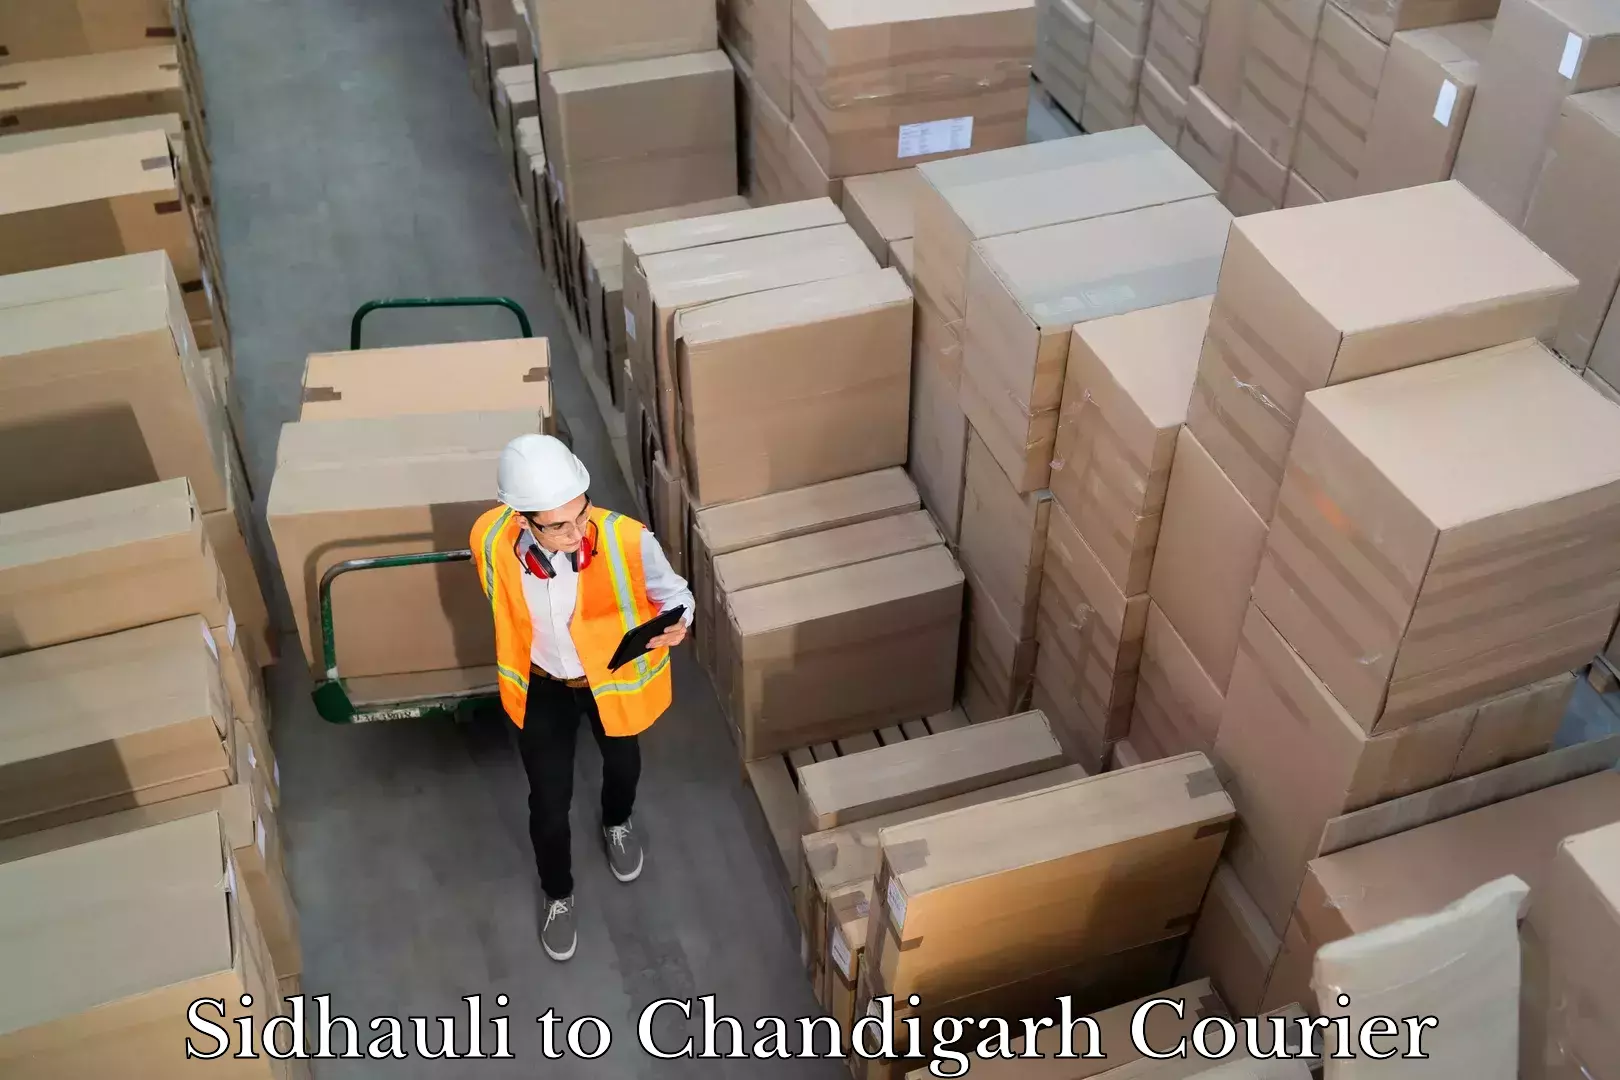 Courier service comparison Sidhauli to Chandigarh